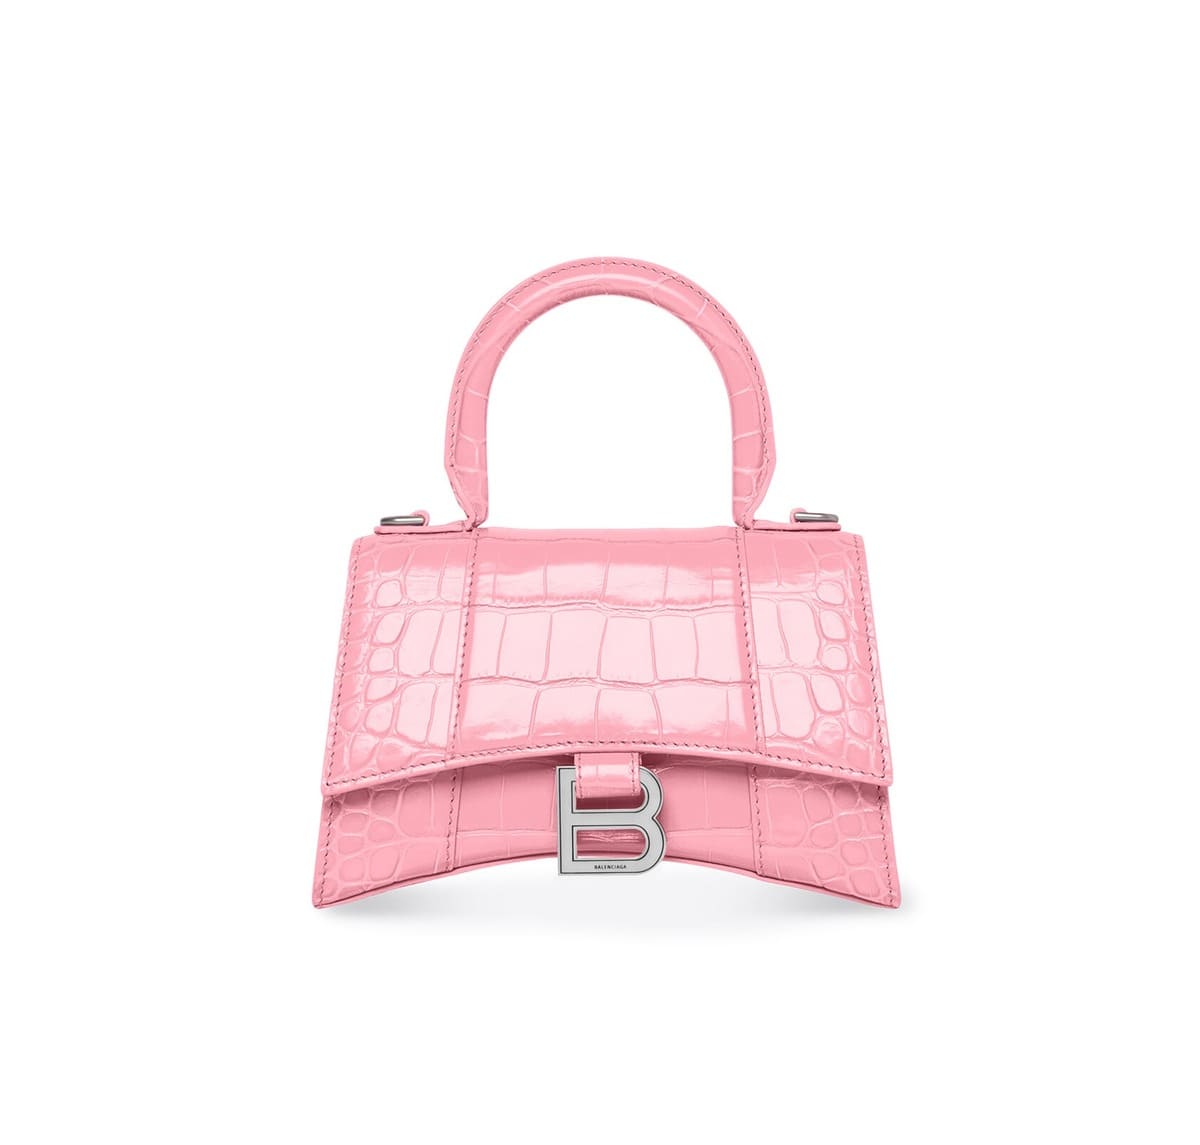 Balenciaga Hourglass XS Bag in Croc Embossed pink